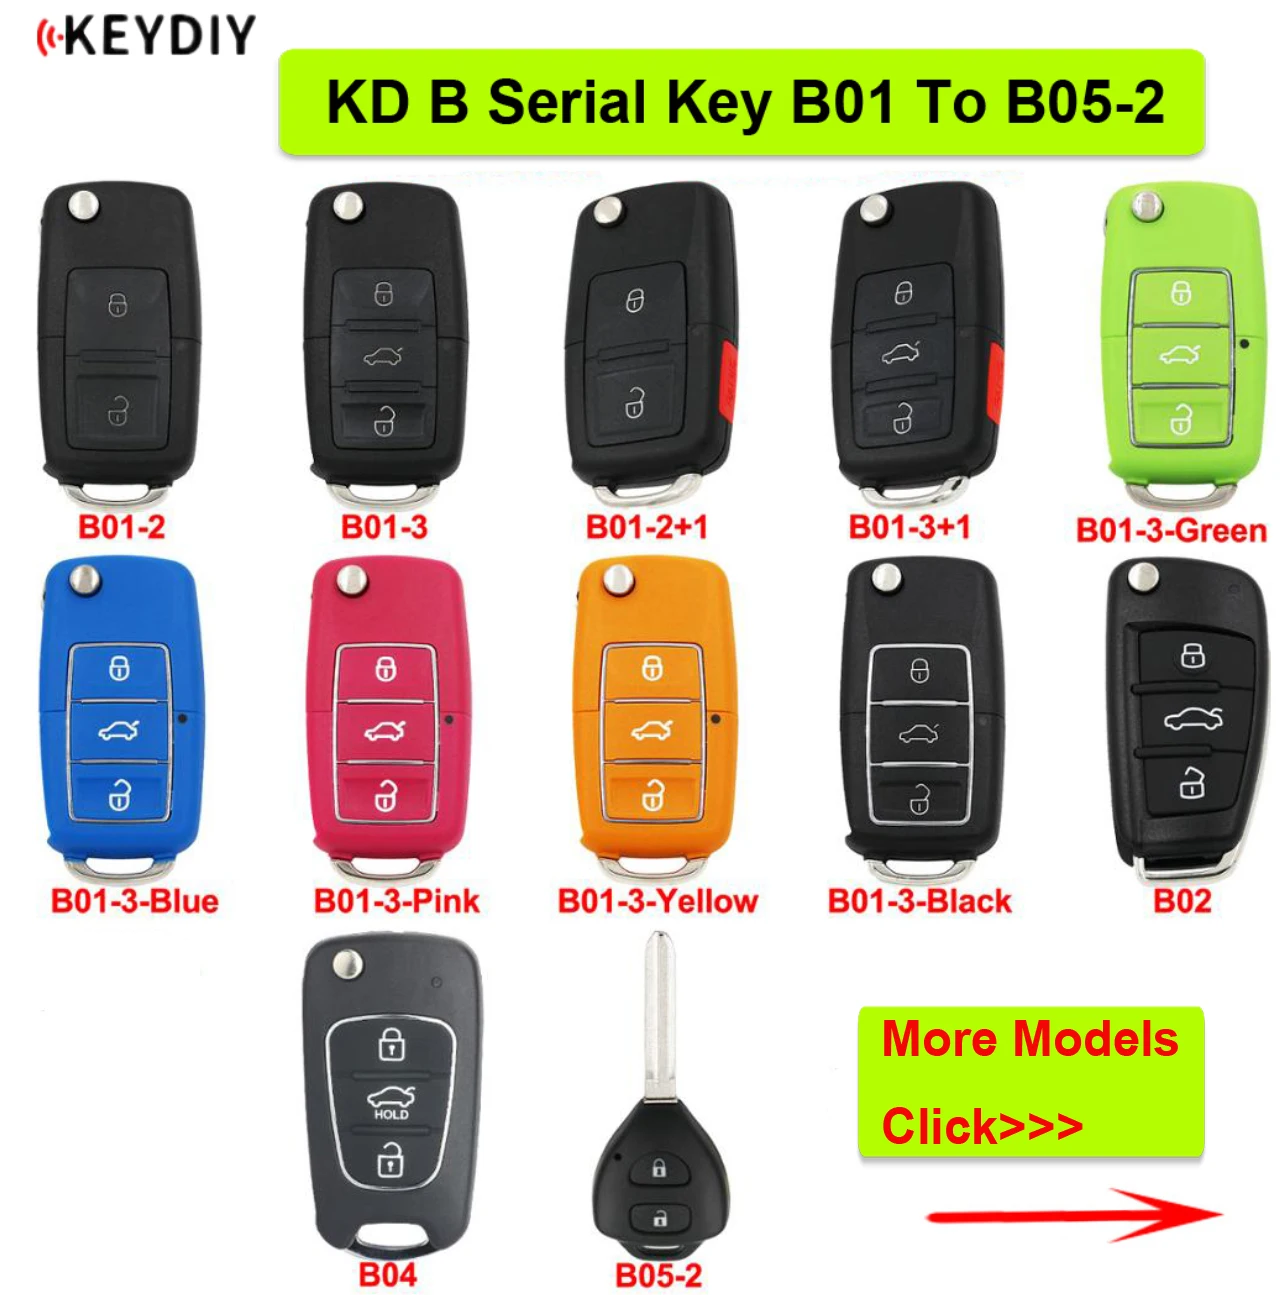 KEYDIY Universal Remotes B-Series B14-2 for KD900 KD900+ 